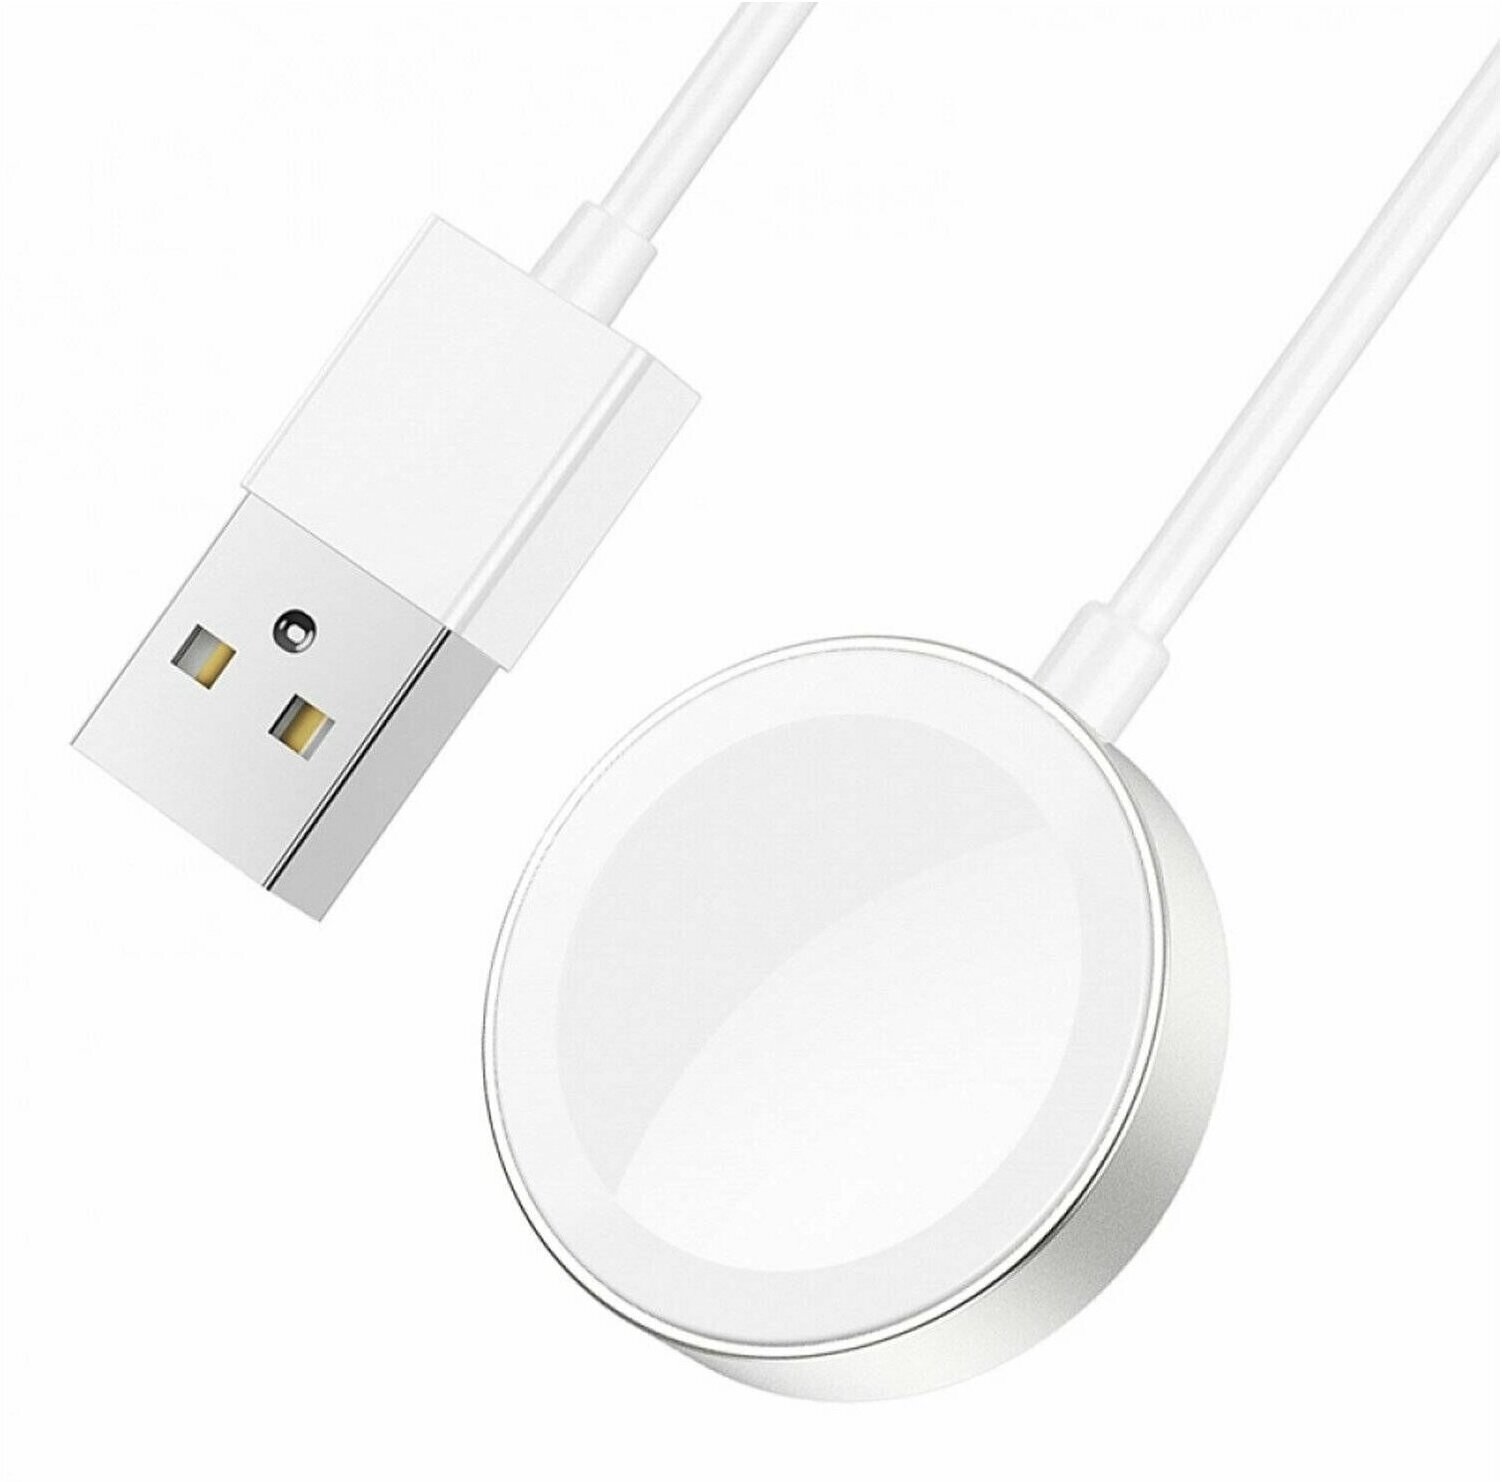 Беспроводное зарядное устройство Носо CW39 для Apple Watch, 5W, 1.2м, белый